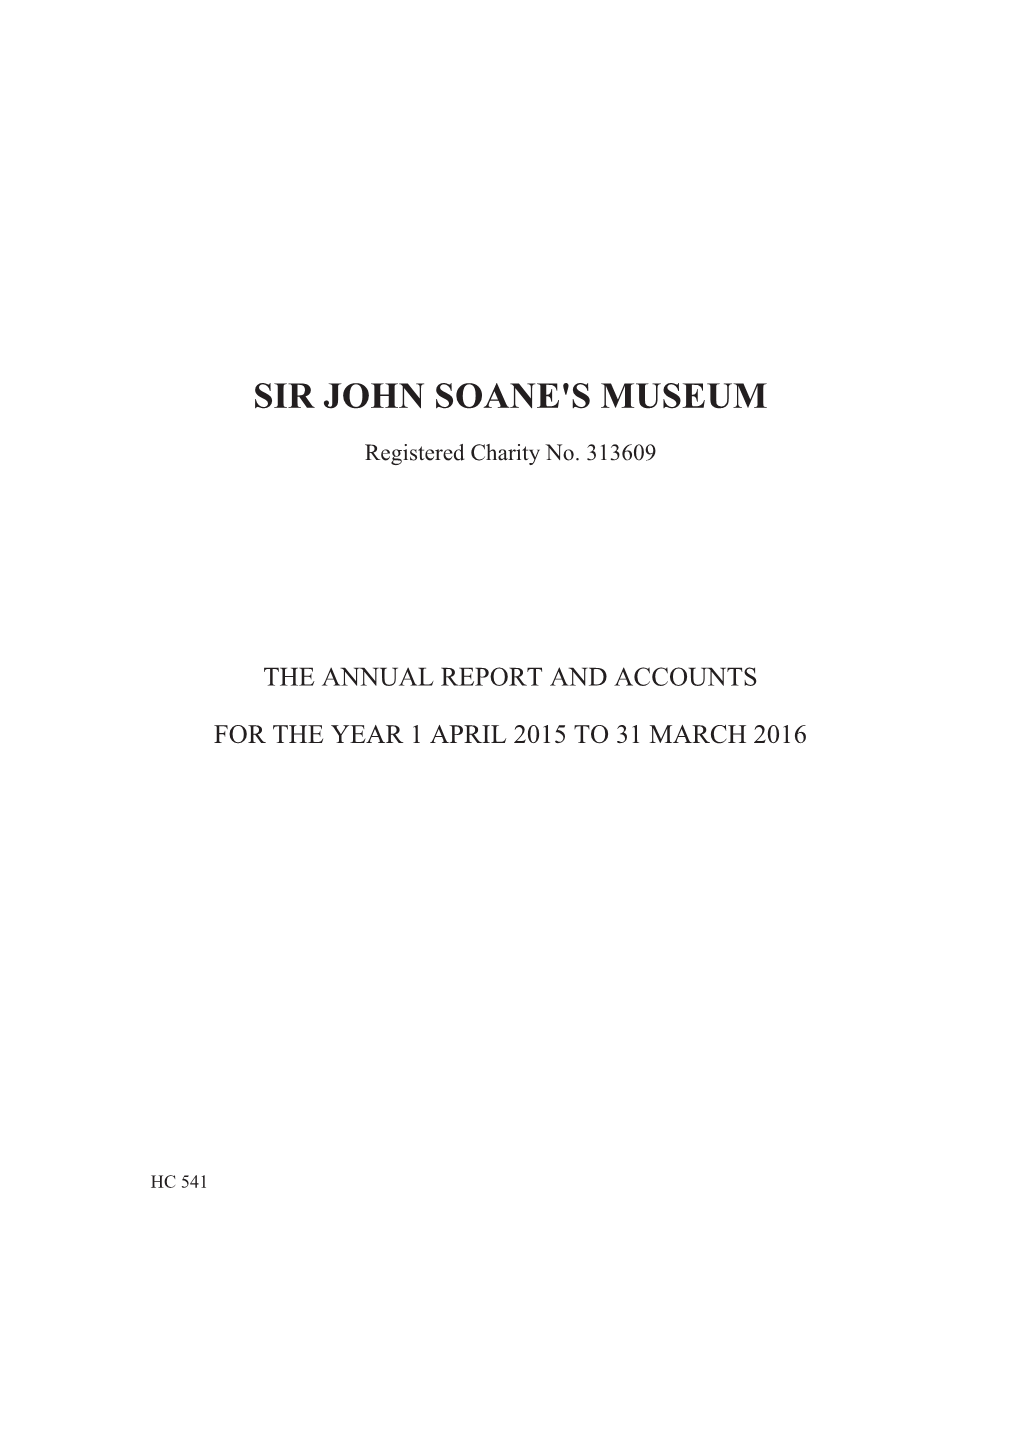 Sir John Soane's Museum Annual Report and Accounts